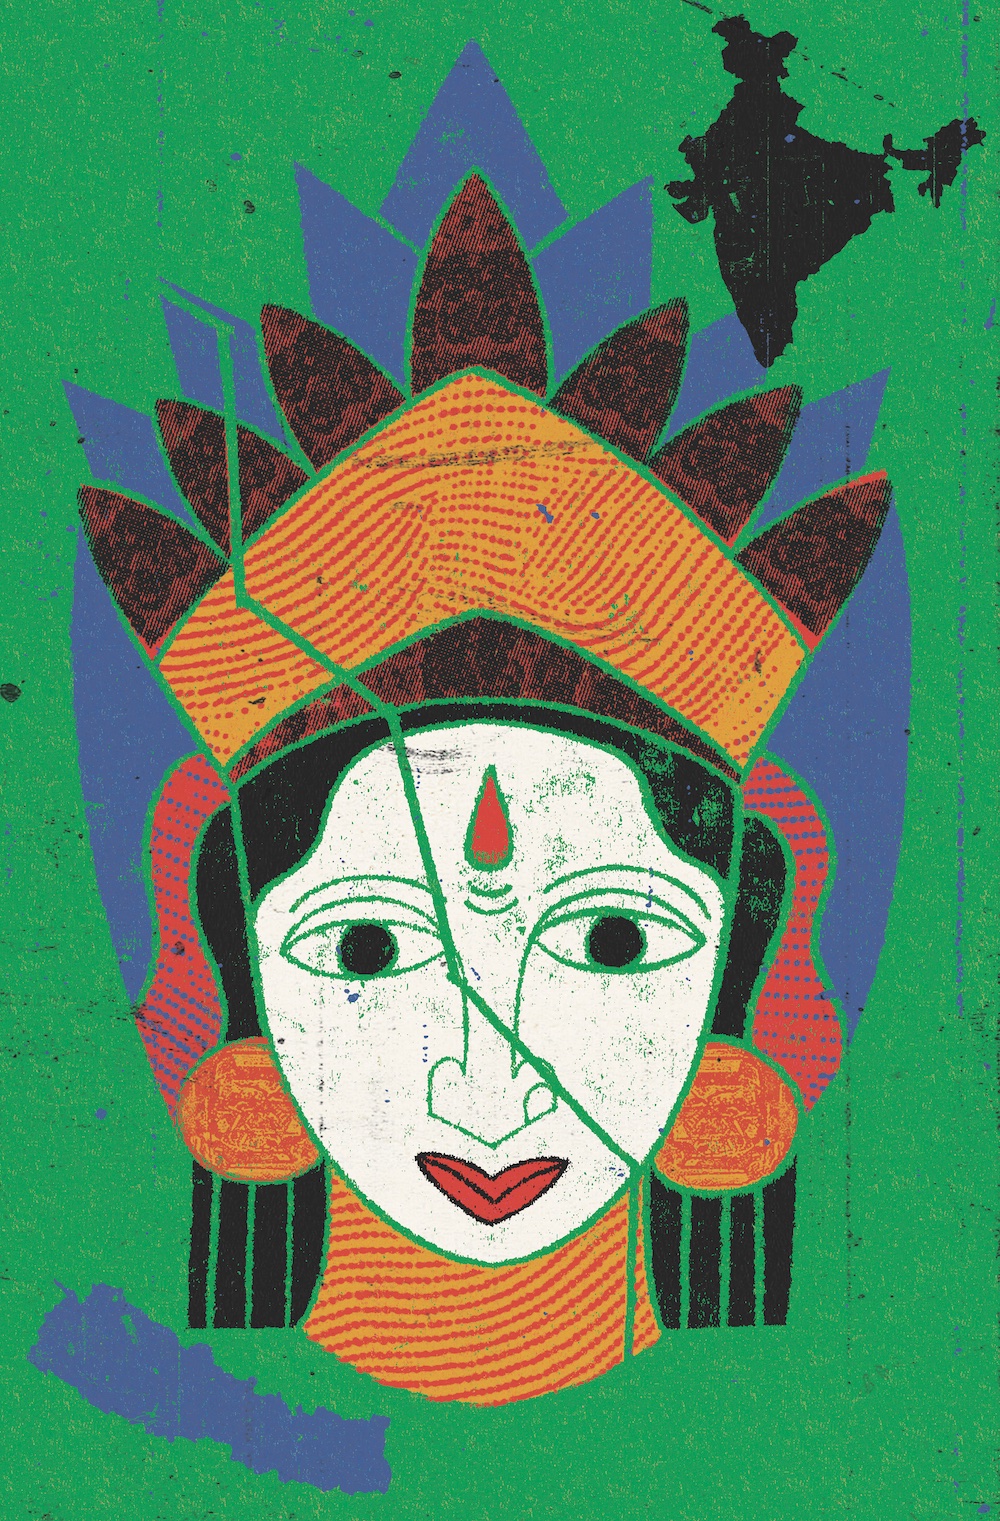 An illustration showing the Hindu mythological figure Sita.